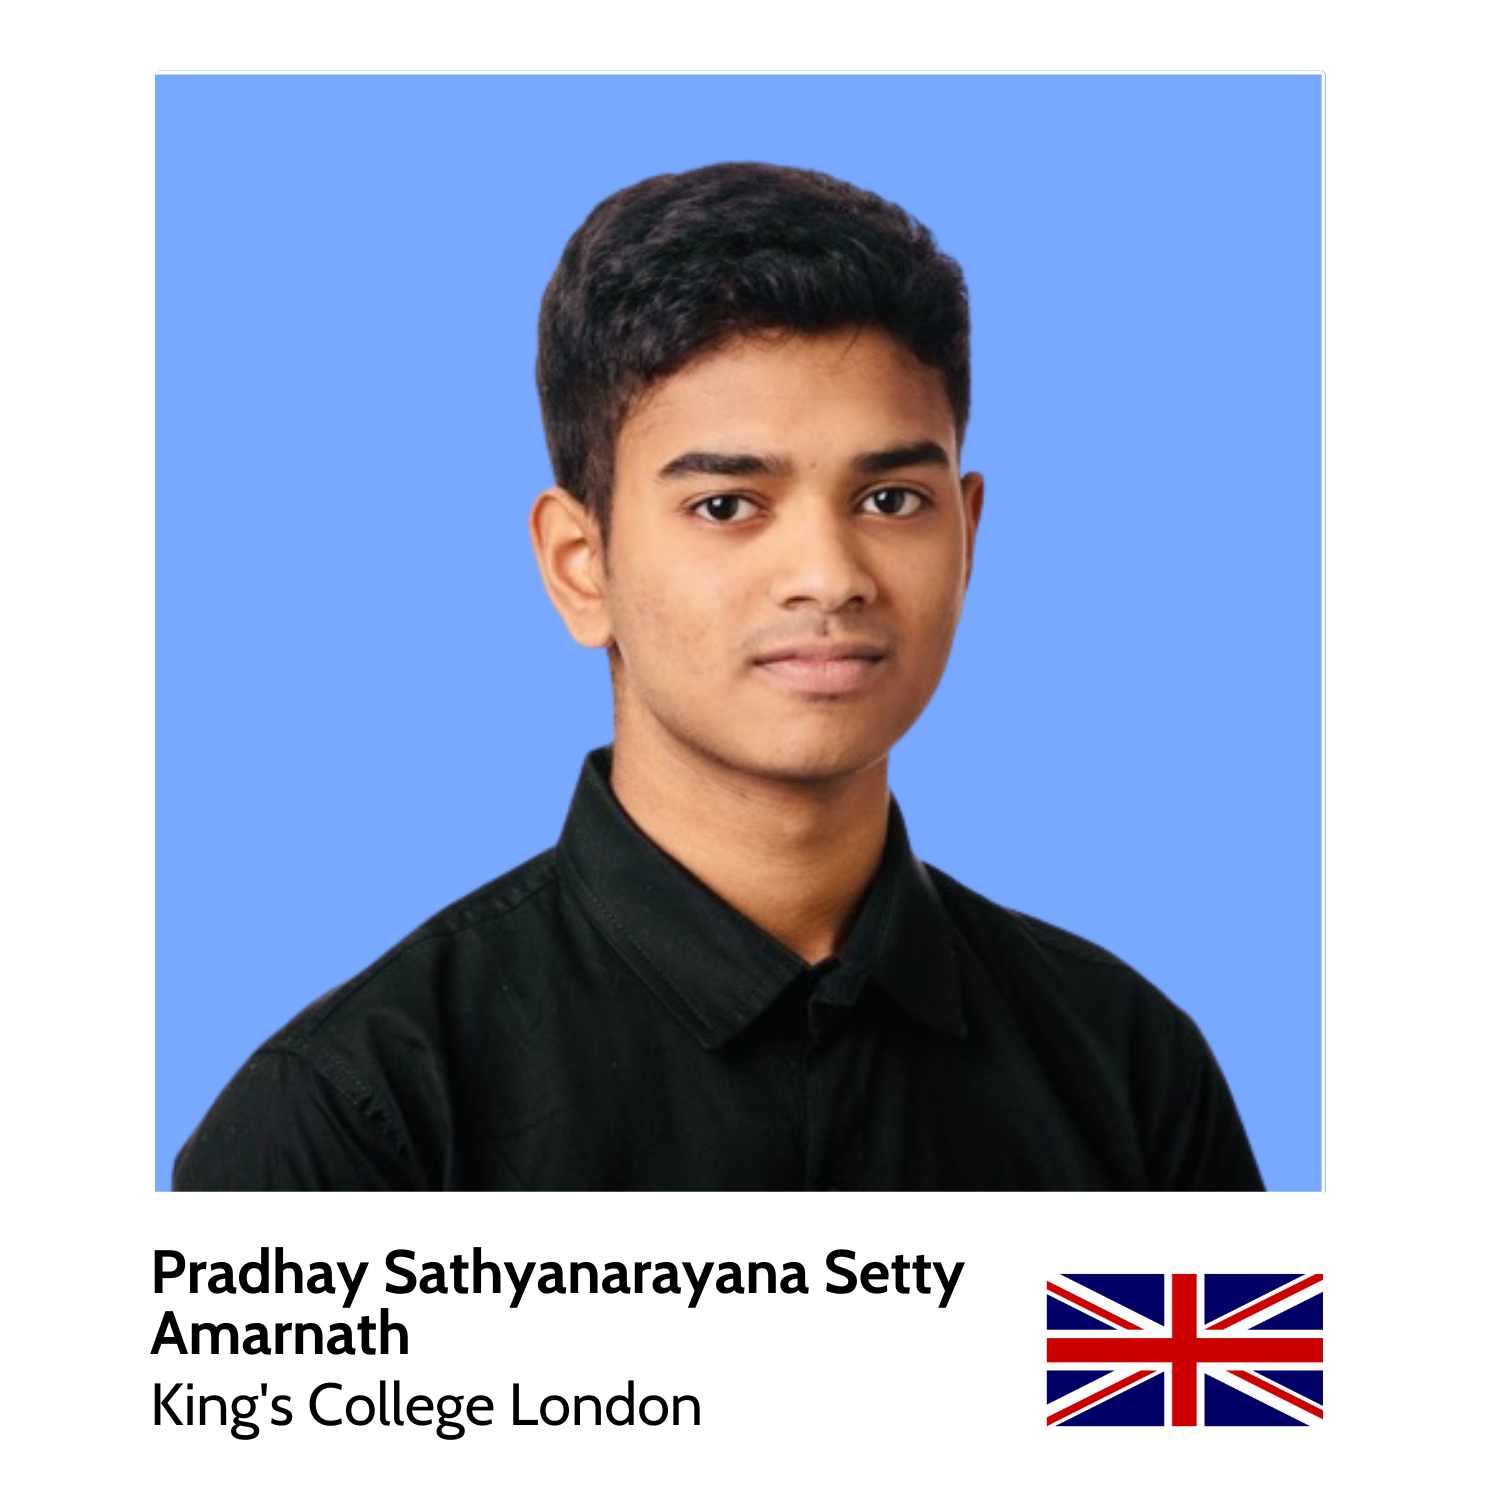 Your_Big_Year_ibm_z_student_ambassador_Pradhay_Sathyanarayana_Setty_Amarnath_King's_College_London.png